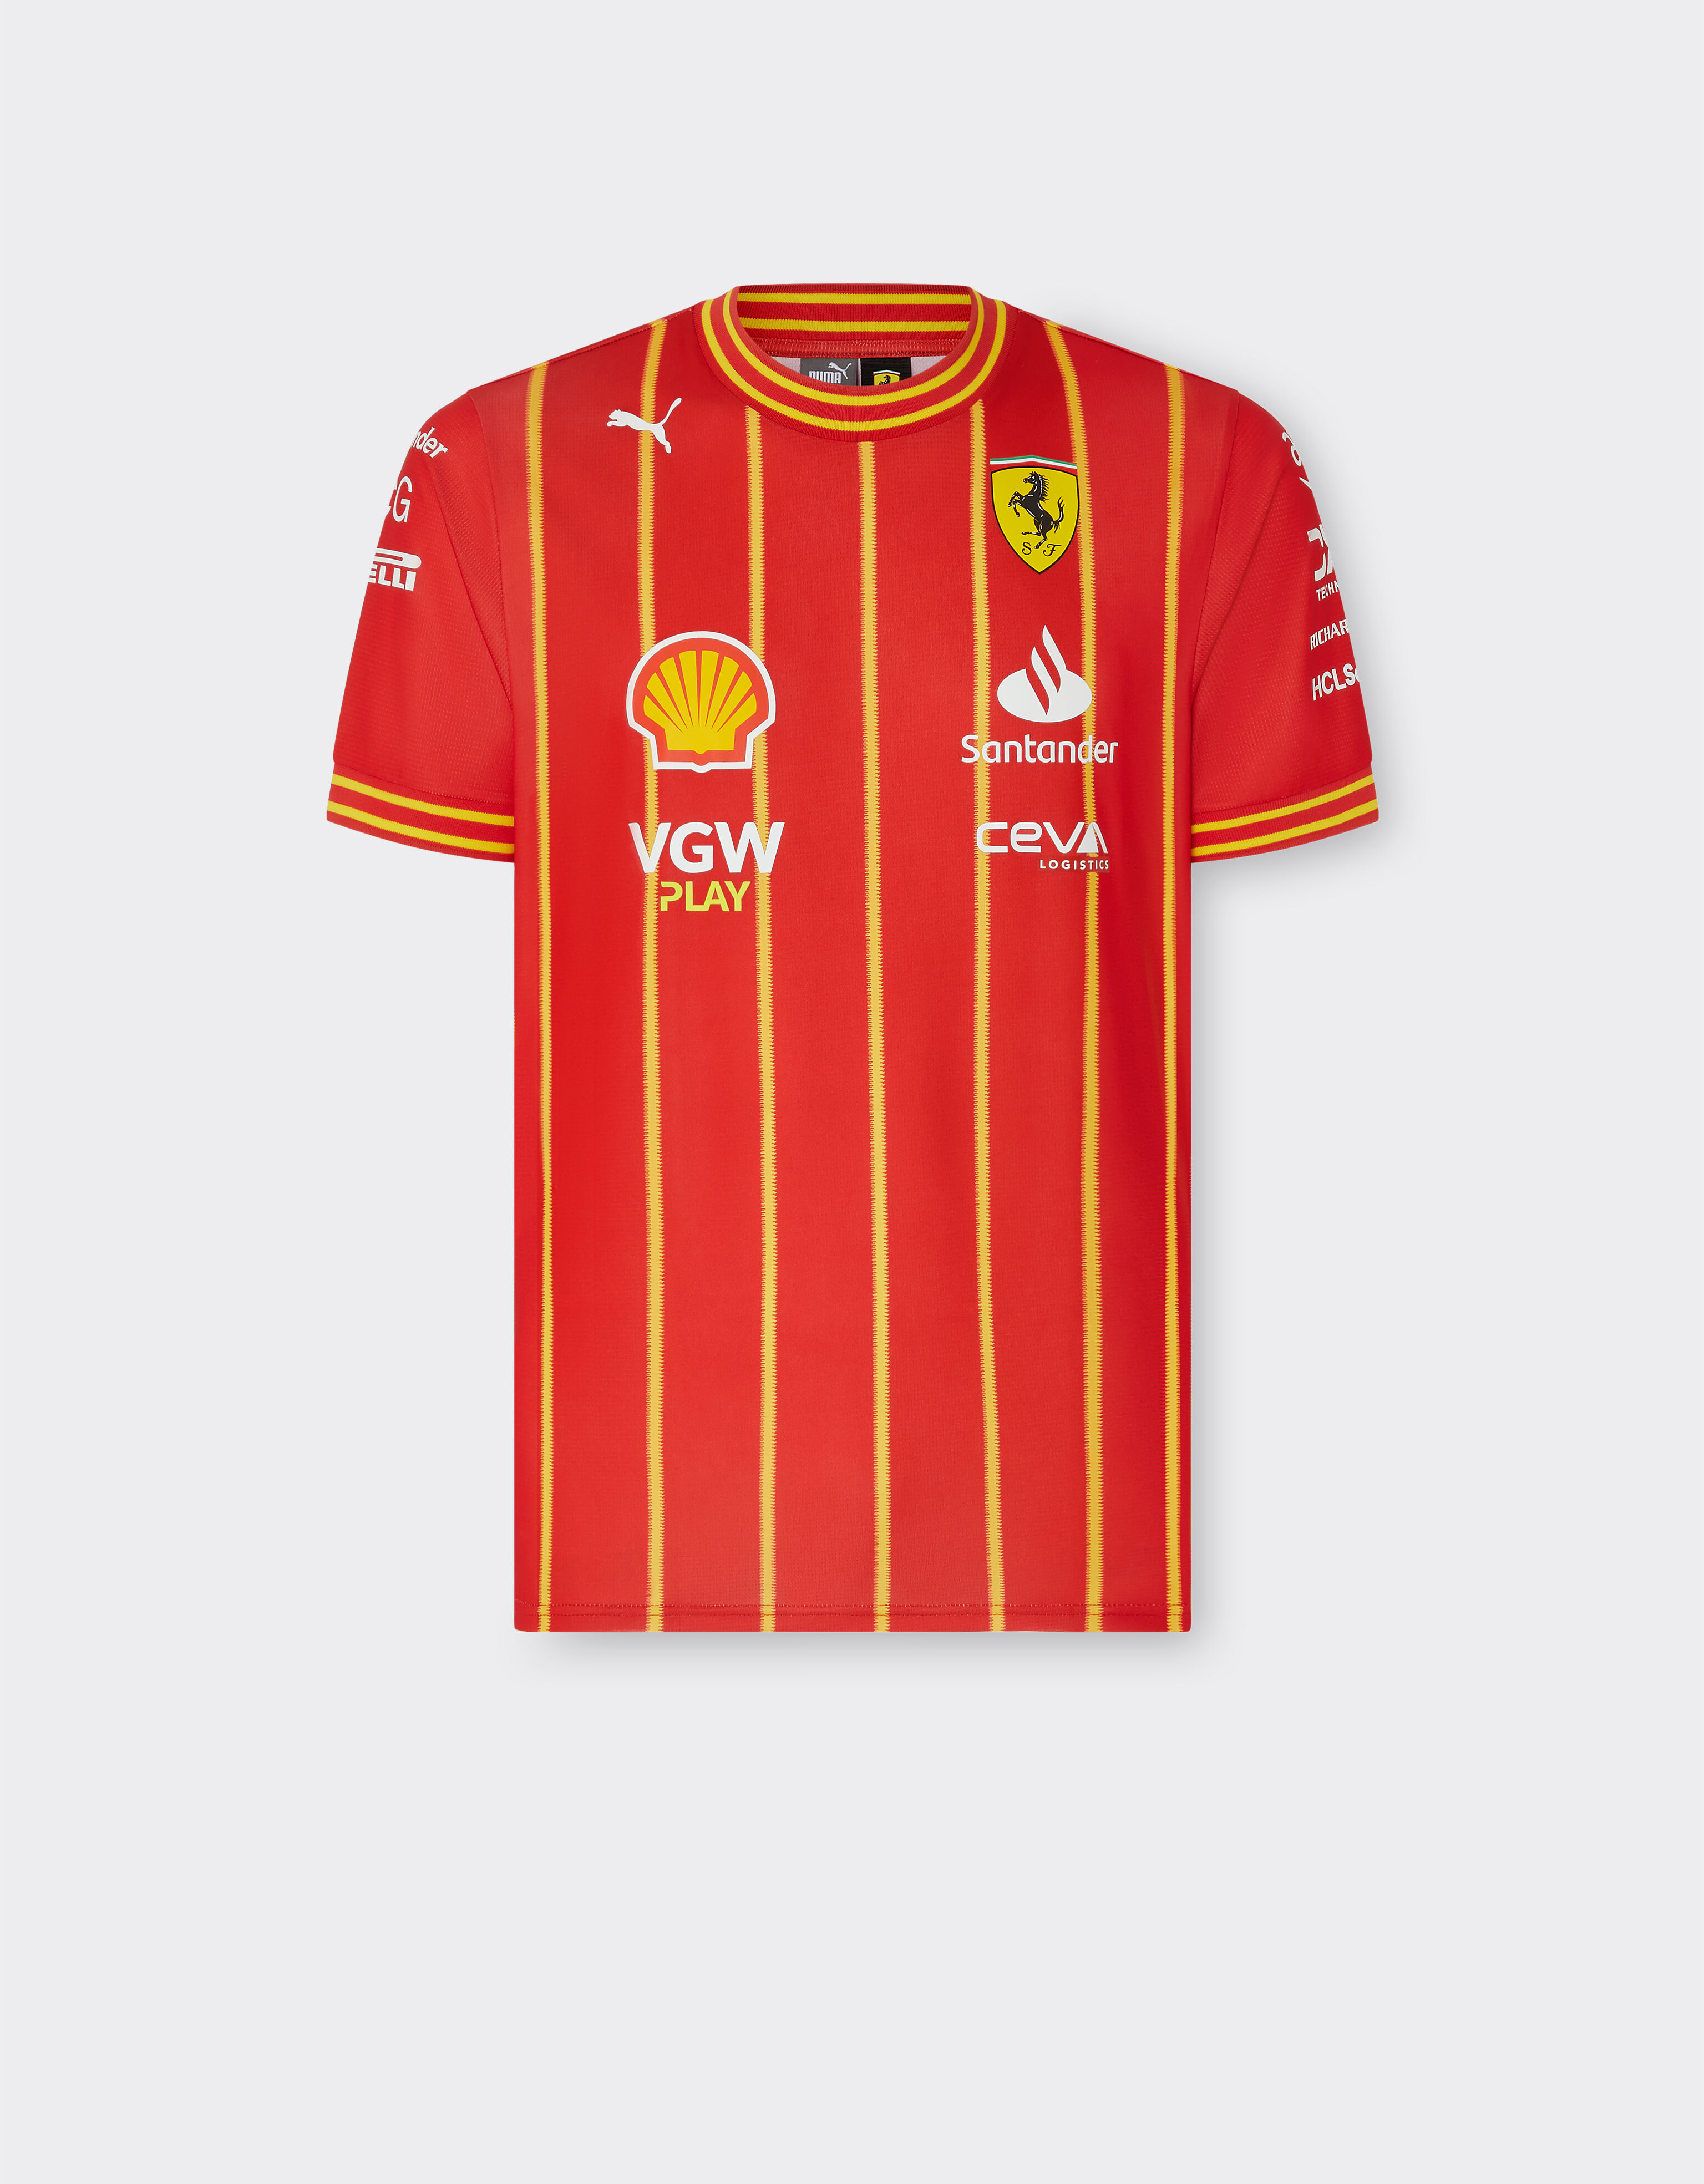 ${brand} Sainz Puma Football Shirt for Scuderia Ferrari - Autriche Special Edition ${colorDescription} ${masterID}